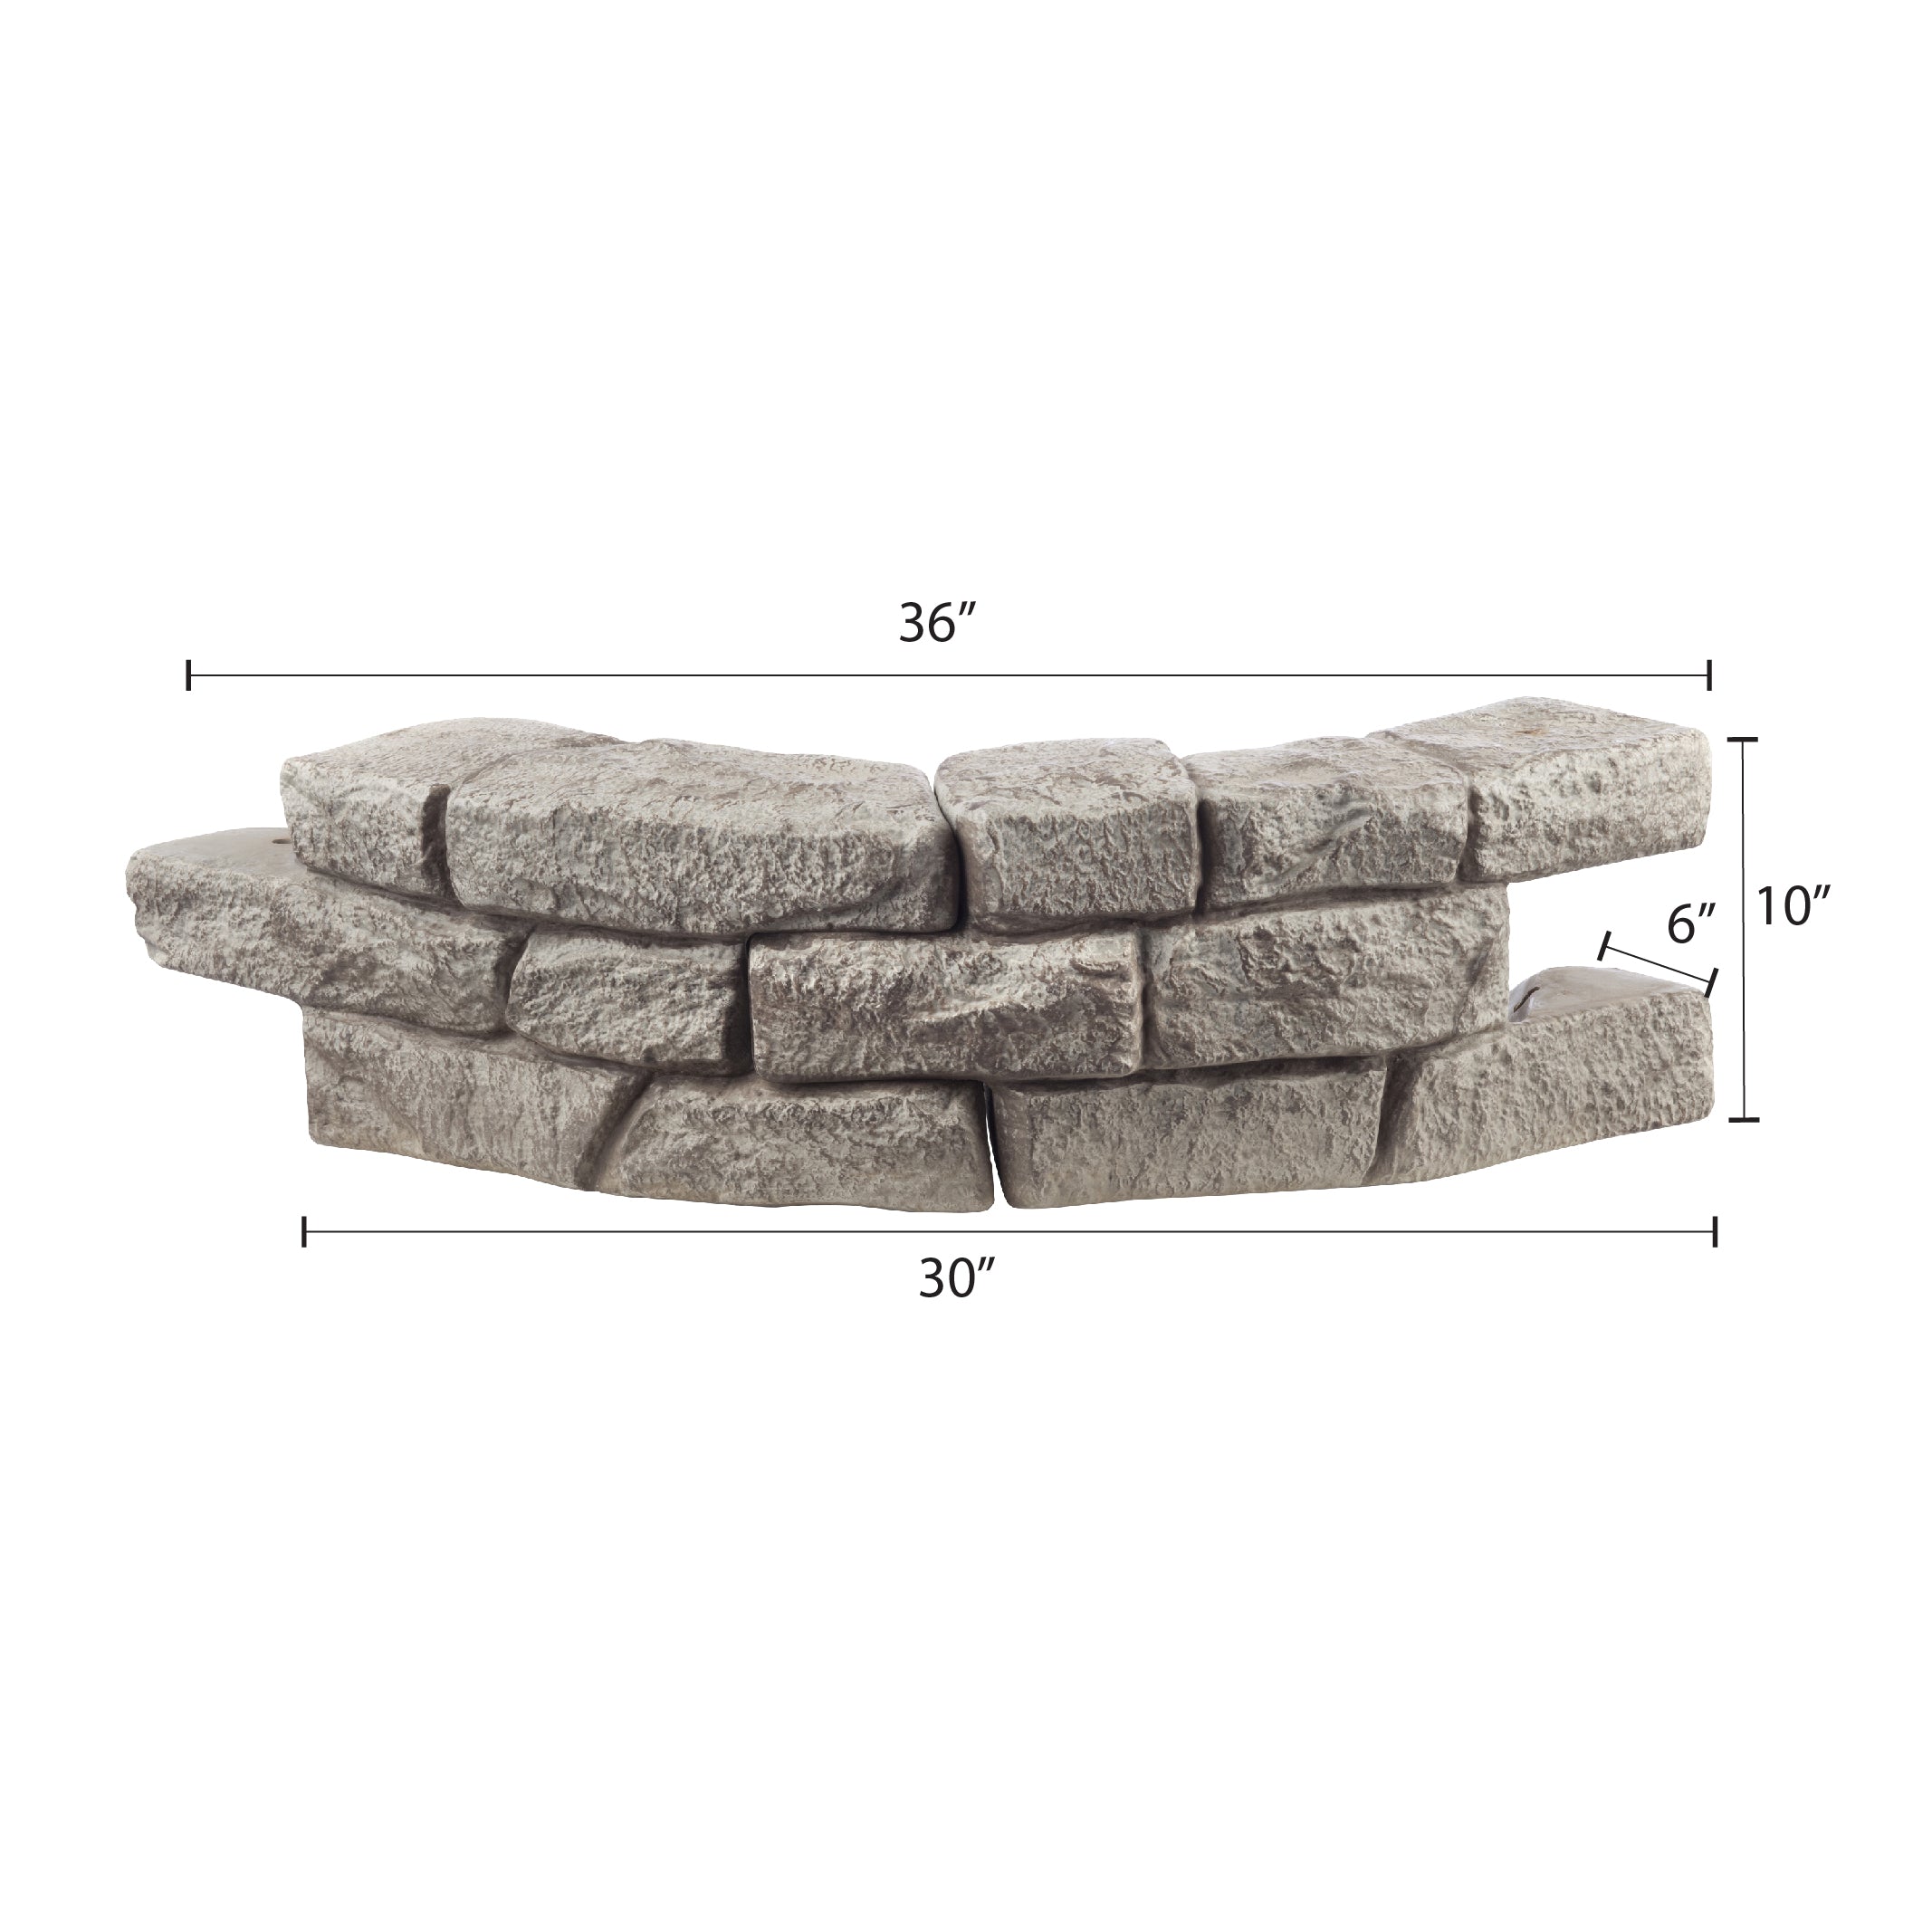 Rock Lock Raised Garden Bed Kit - 8 foot Oval, 20 inch High